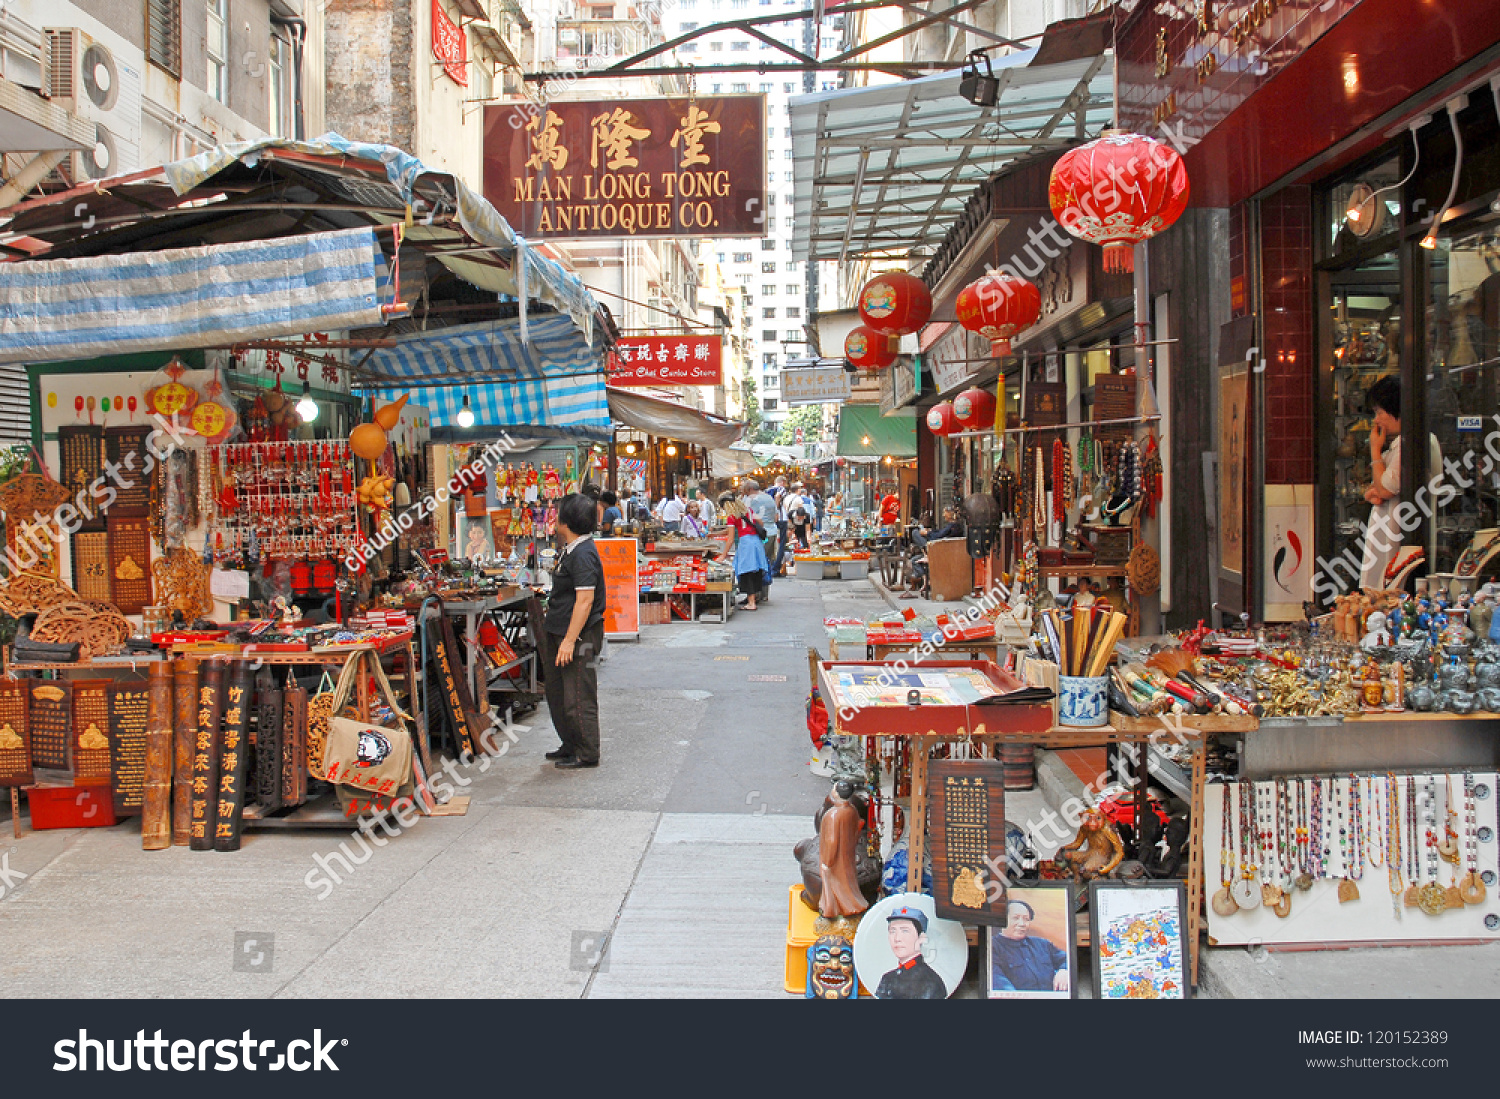 http://image.shutterstock.com/z/stock-photo-hong-kong-china-nov-shoppers-at-cat-street-historical-market-originally-bazaar-the-120152389.jpg